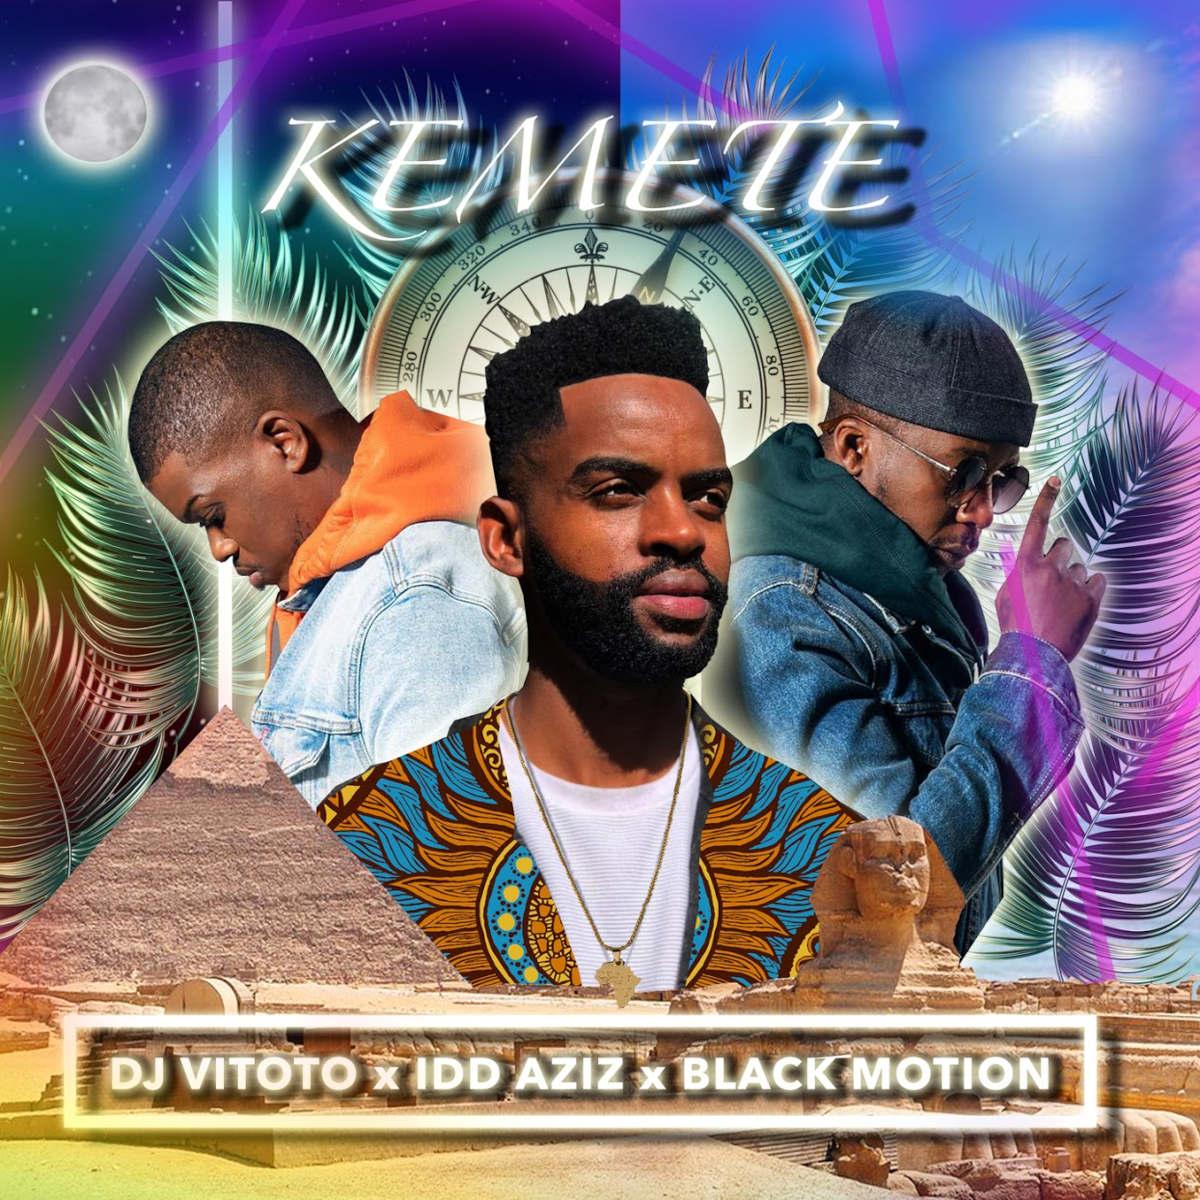 DJ Vitoto - Kemete (feat. Idd Aziz & Black Motion)